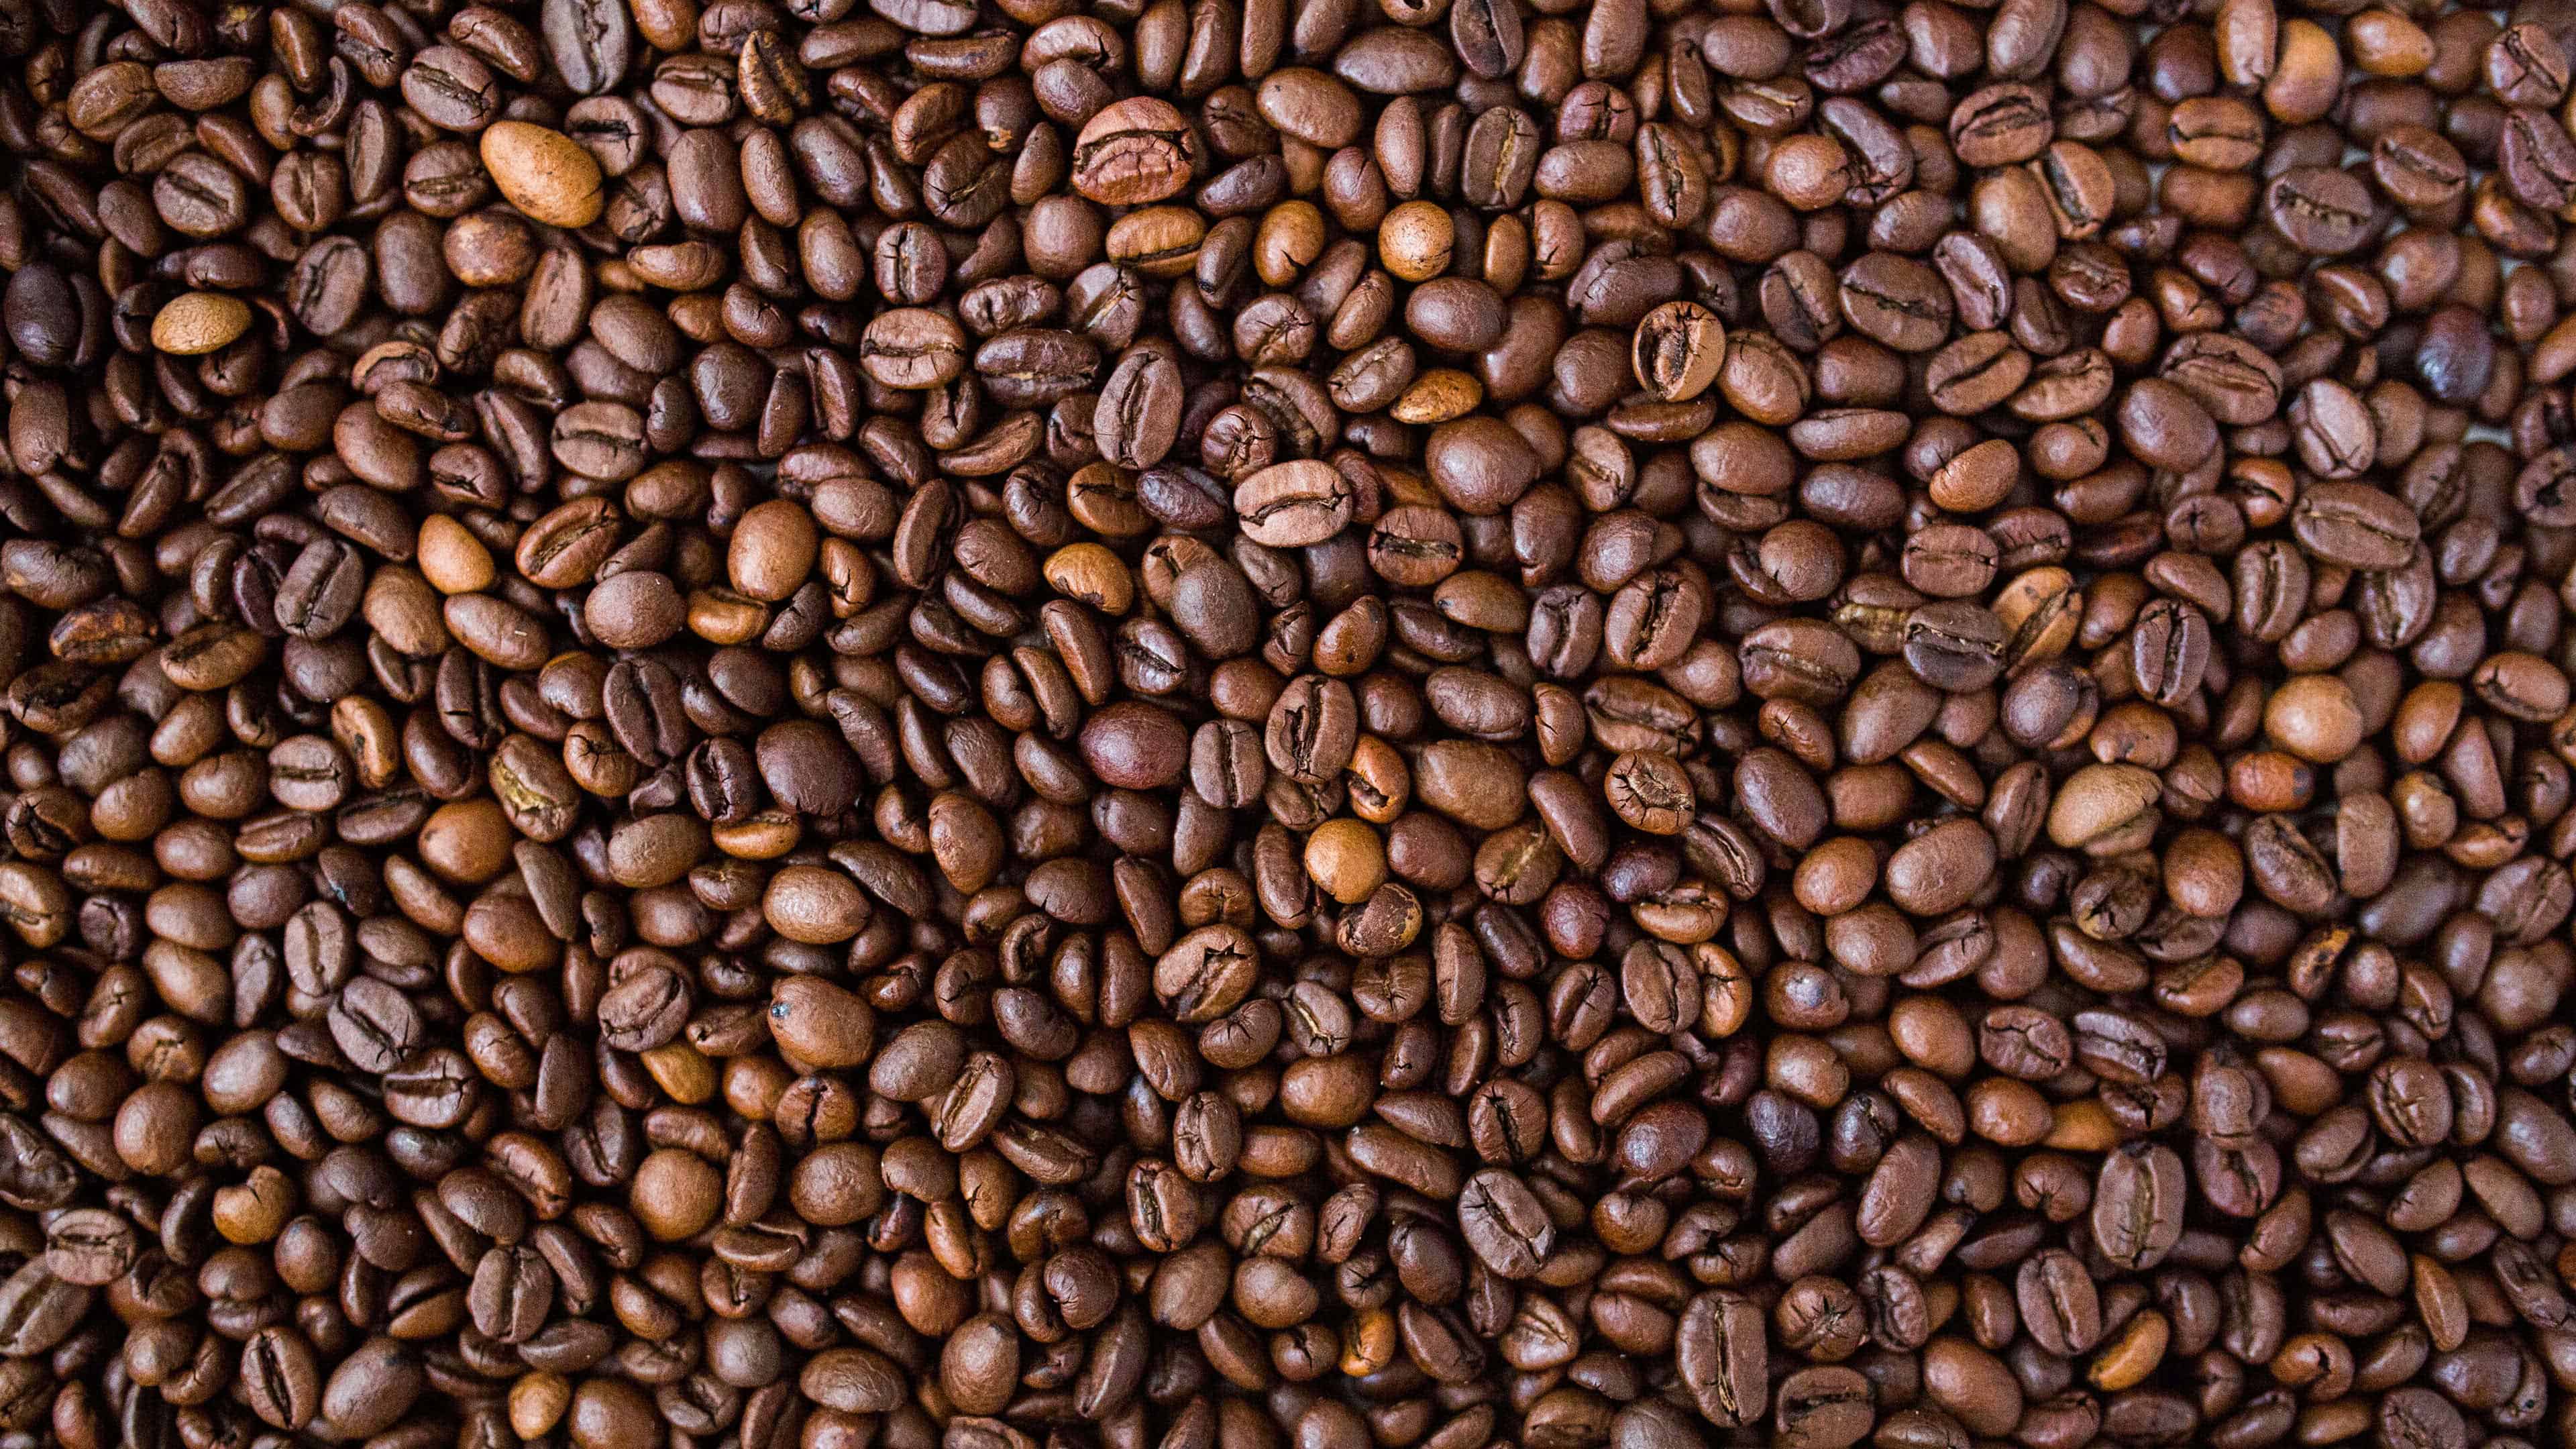 Roasted Coffee Beans UHD 4K Wallpaper